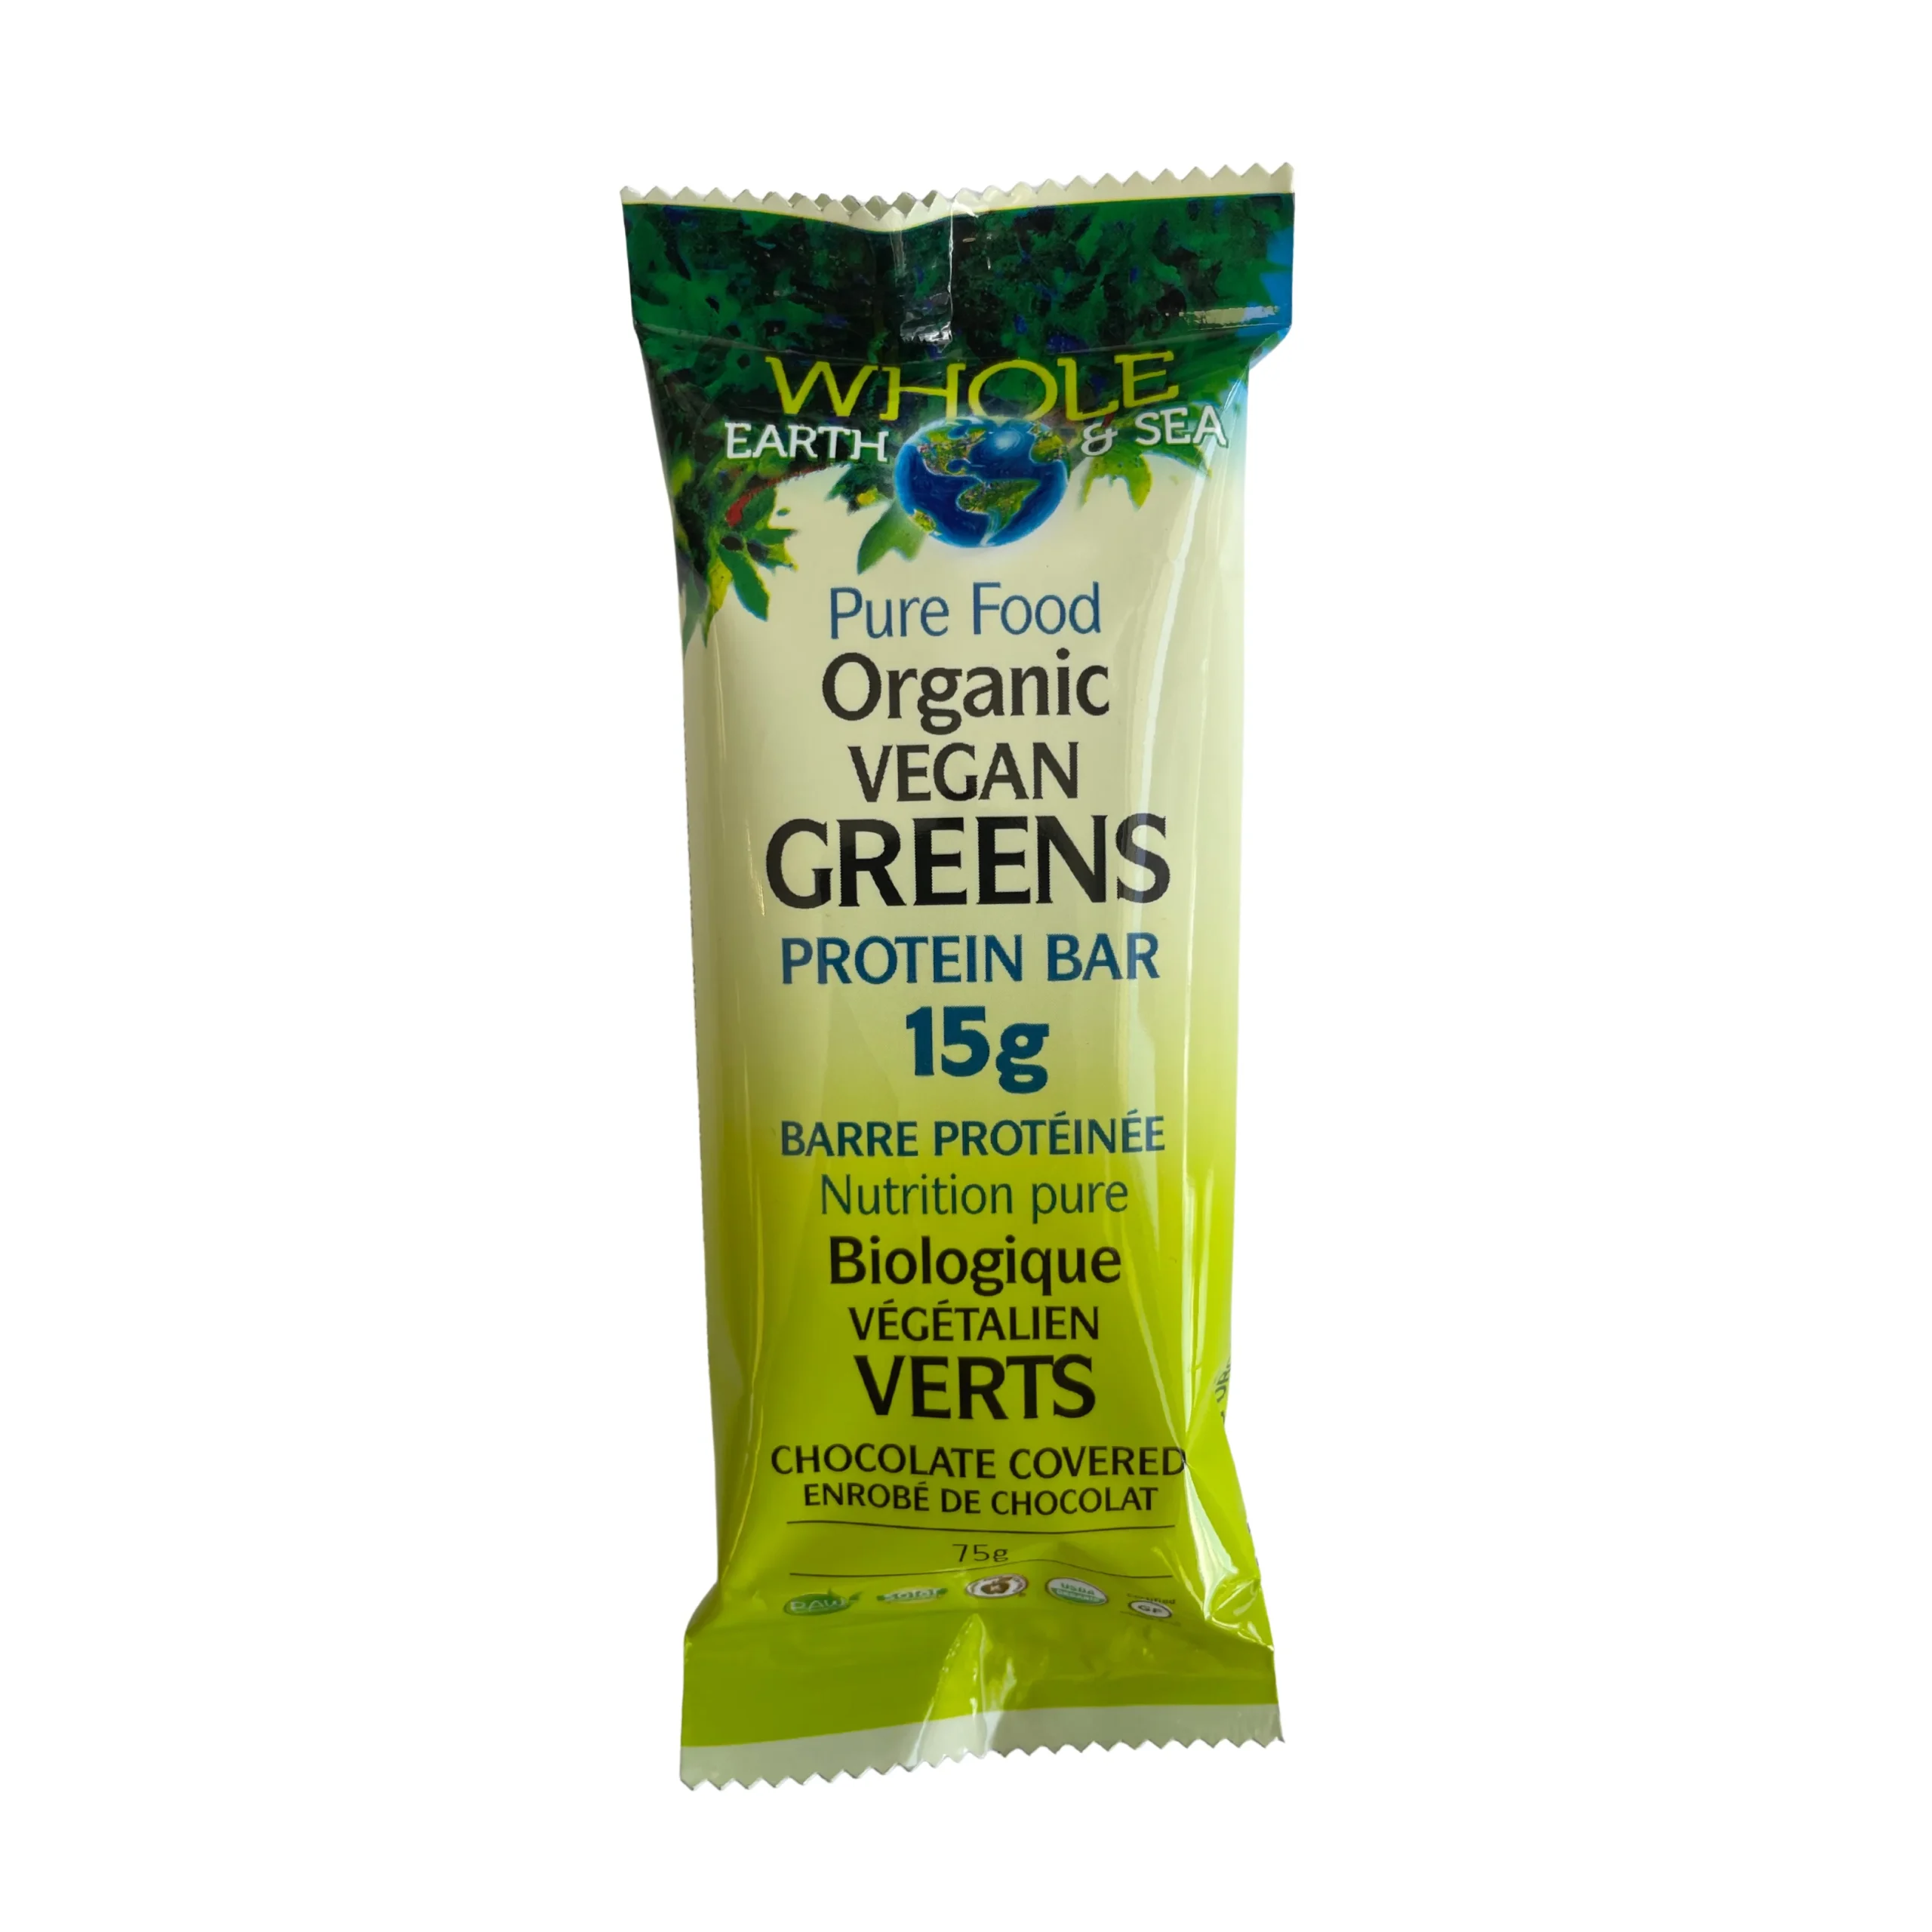 Whole Earth & Sea Vegan Organic Greens Protein Bar 75g